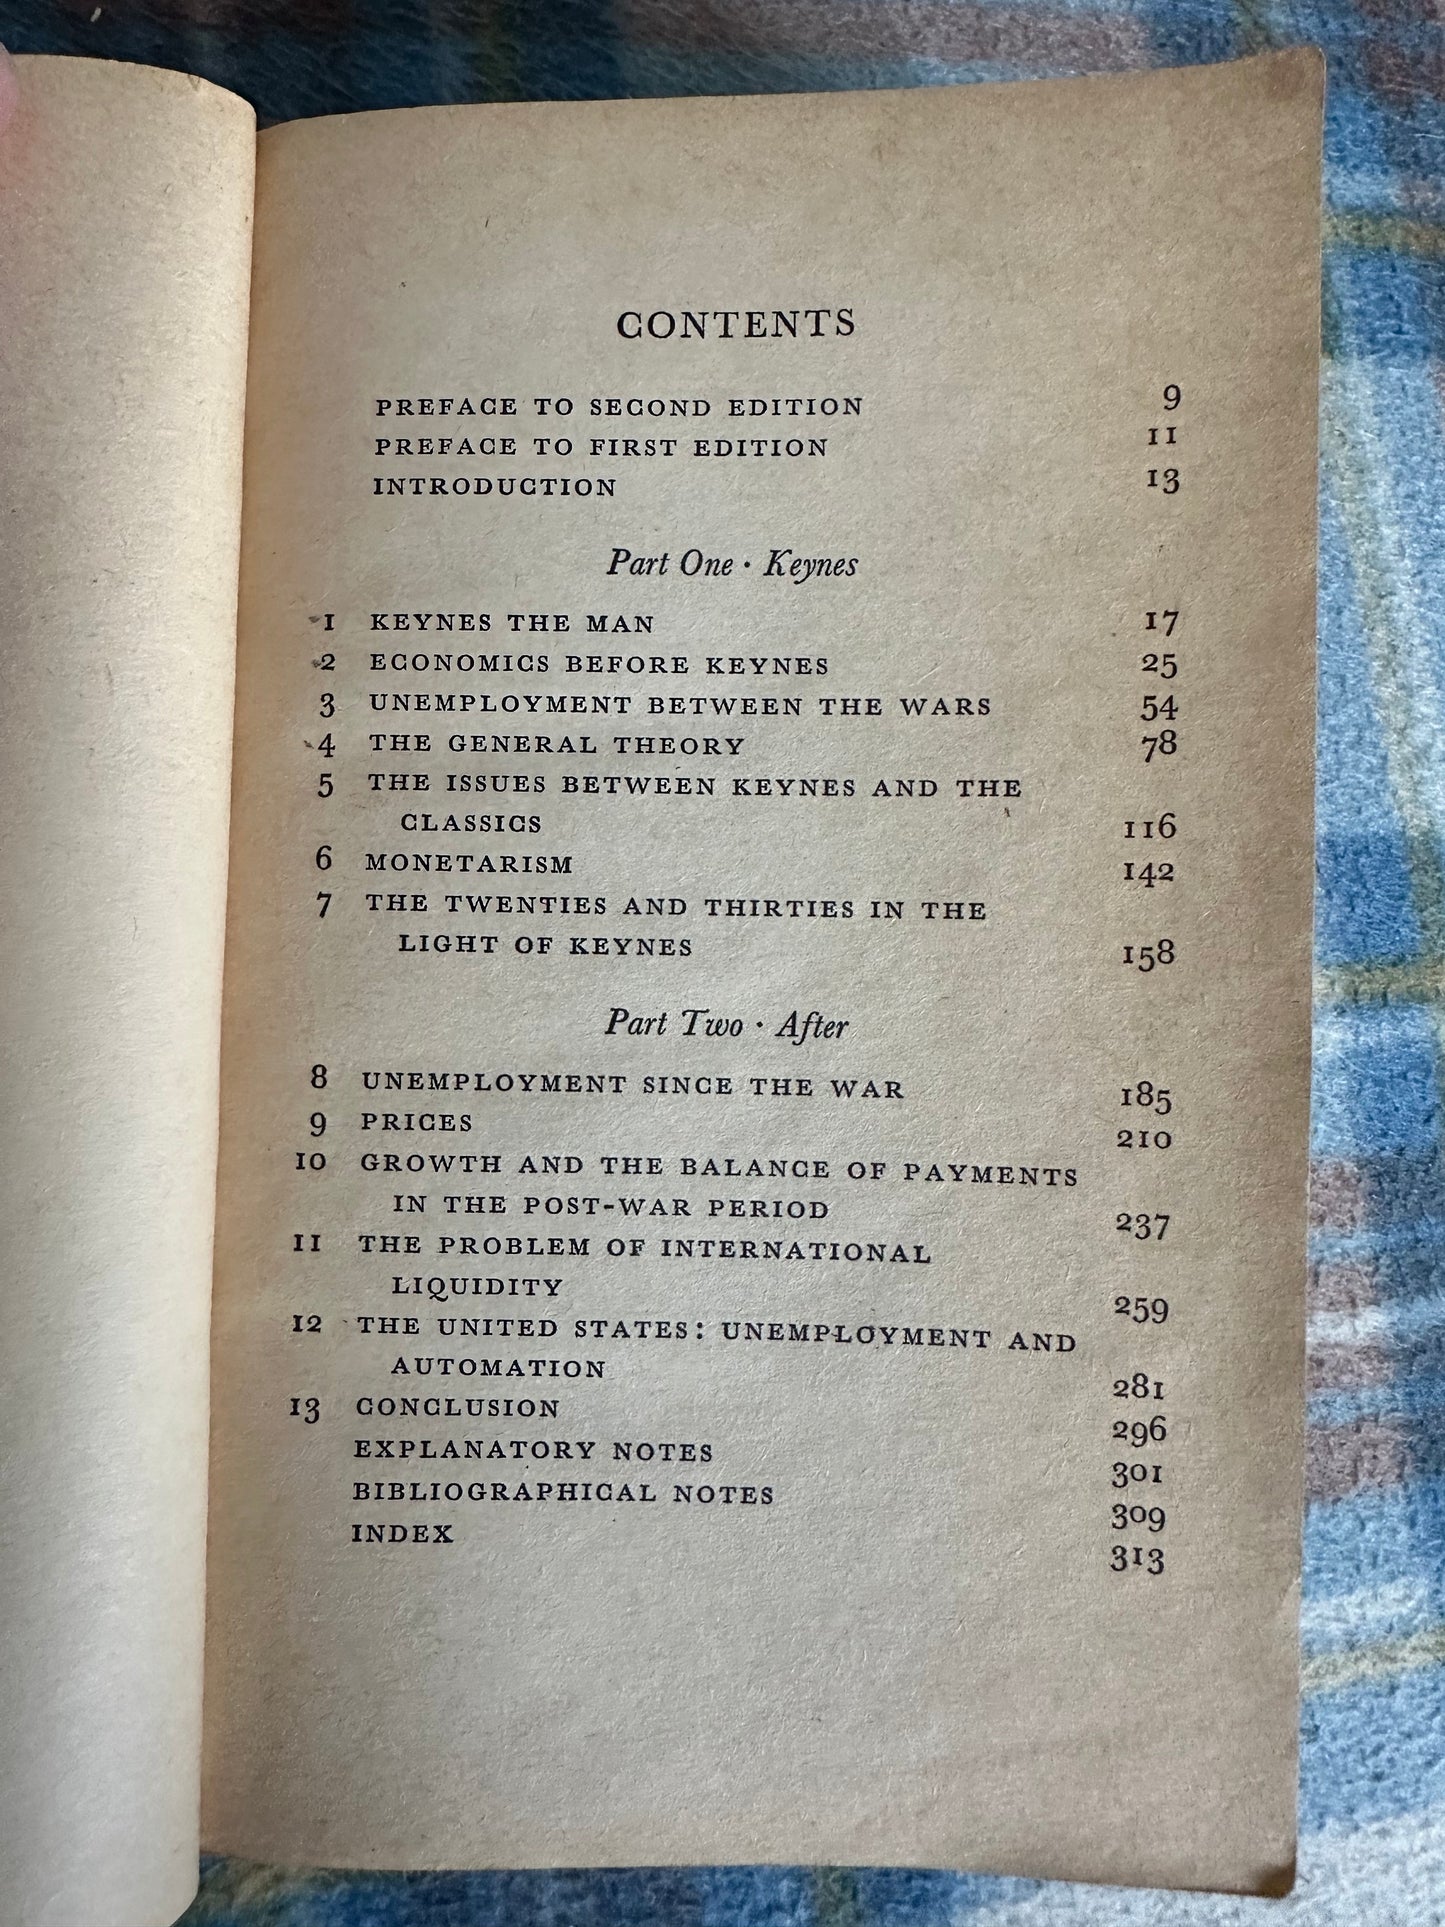 1975 Keynes & After - Michael Stewart(Pelican / Penguin Books)